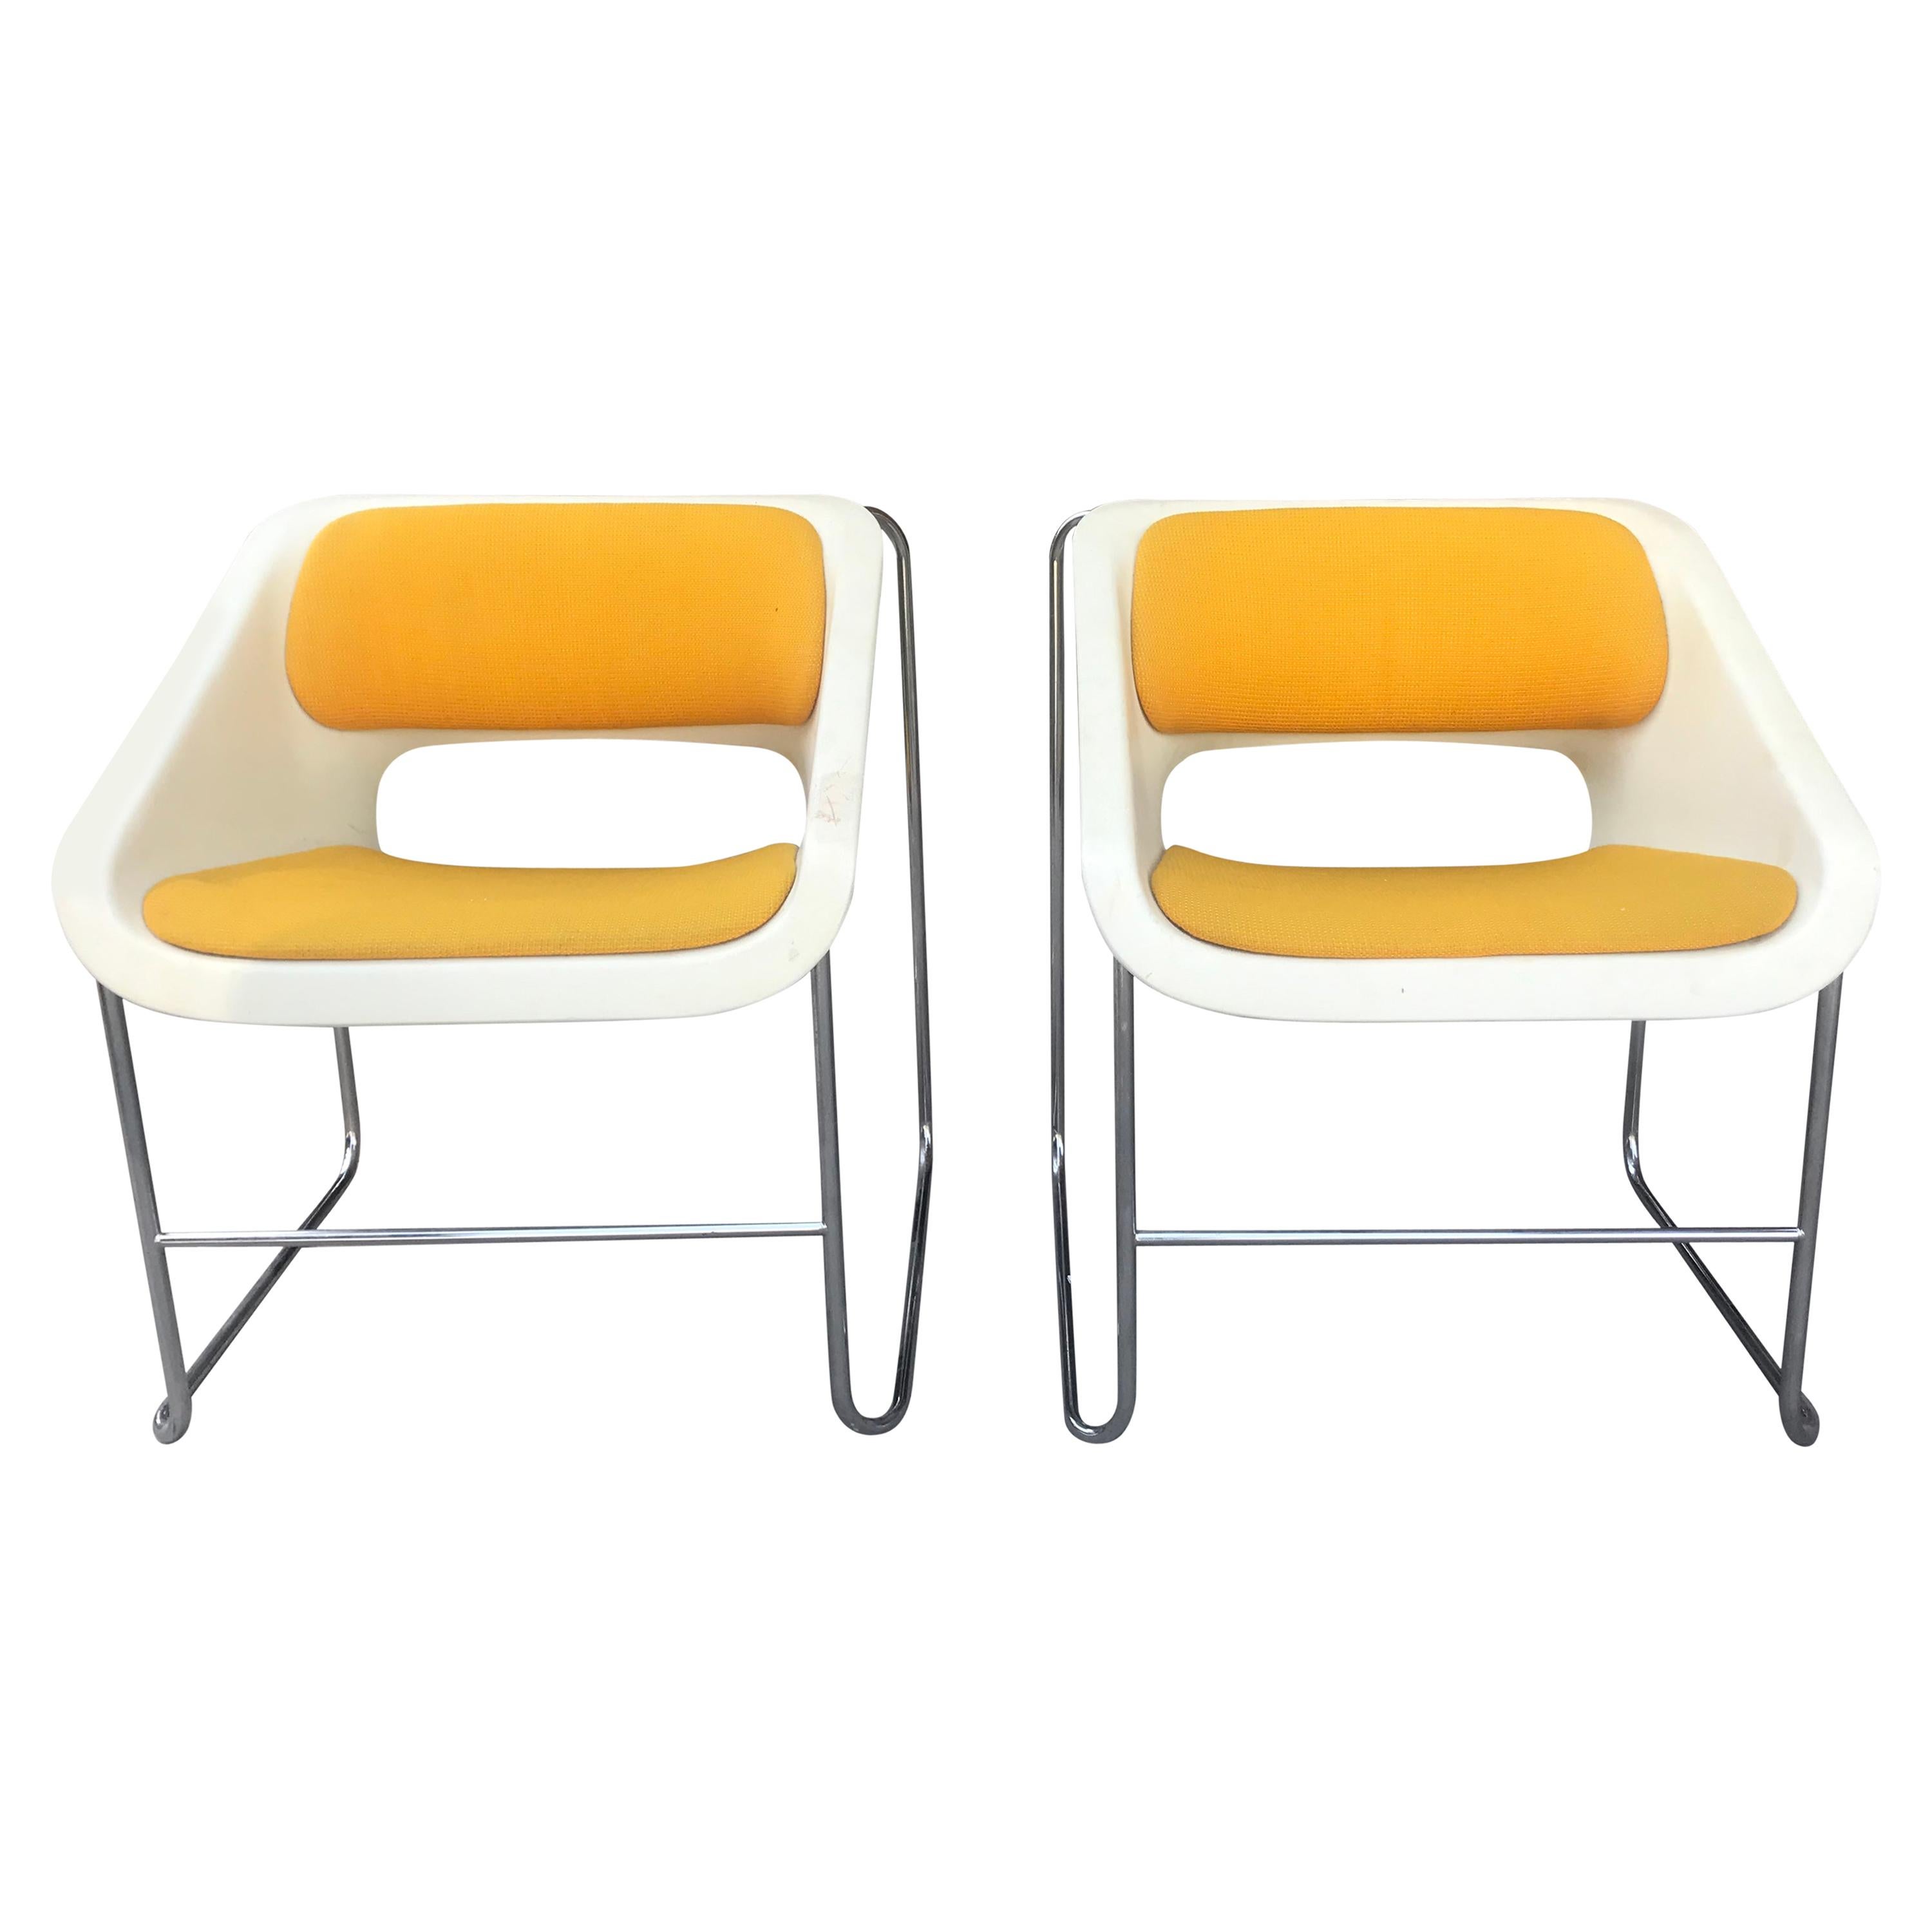 Pop Modernist Fiberglass and Chrome "Lotus" Chairs, Paul Boulva for Artopex